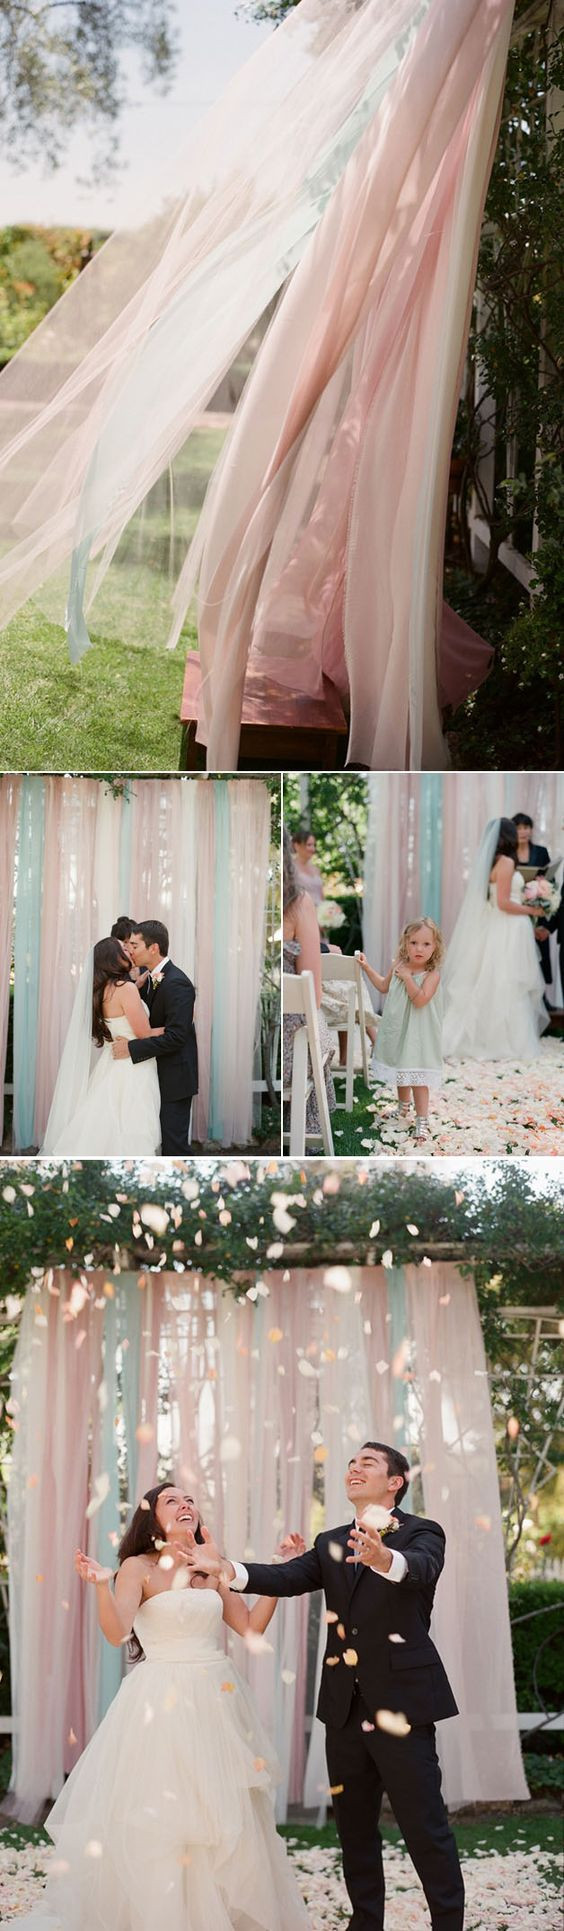 DIY Wedding Backdrop Fabric
 aqua pink wedding ceremony tulle fabric backdrop idea